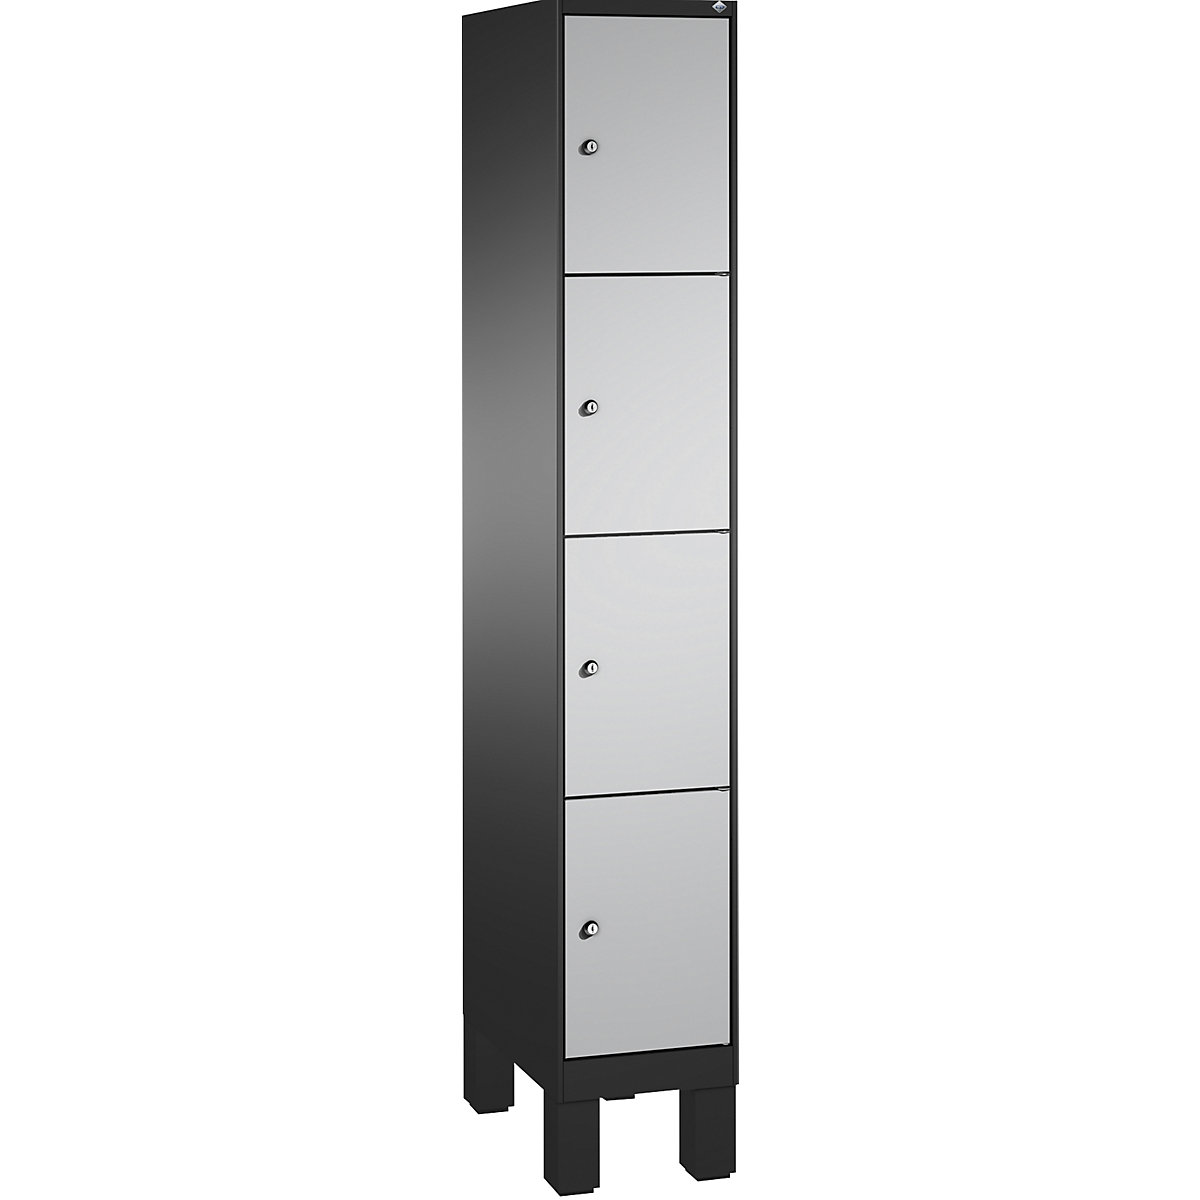 EVOLO locker unit, with feet – C+P, 1 compartment, 4 shelf compartments, compartment width 300 mm, black grey / white aluminium